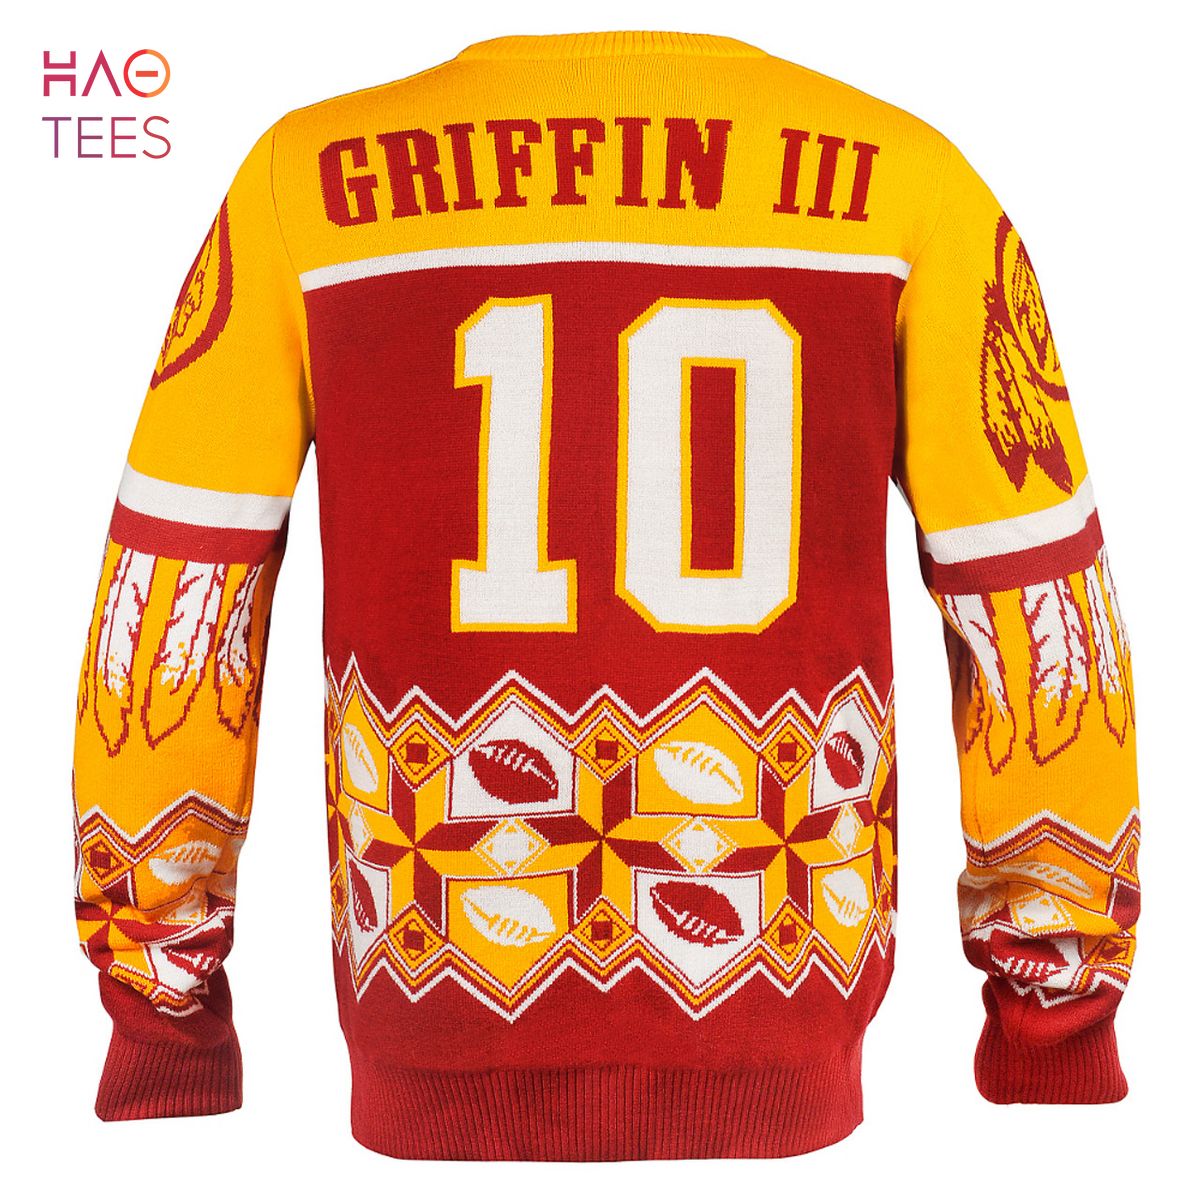 BEST Robert Griffin III Washington Redskins NFL Ugly Player Sweater